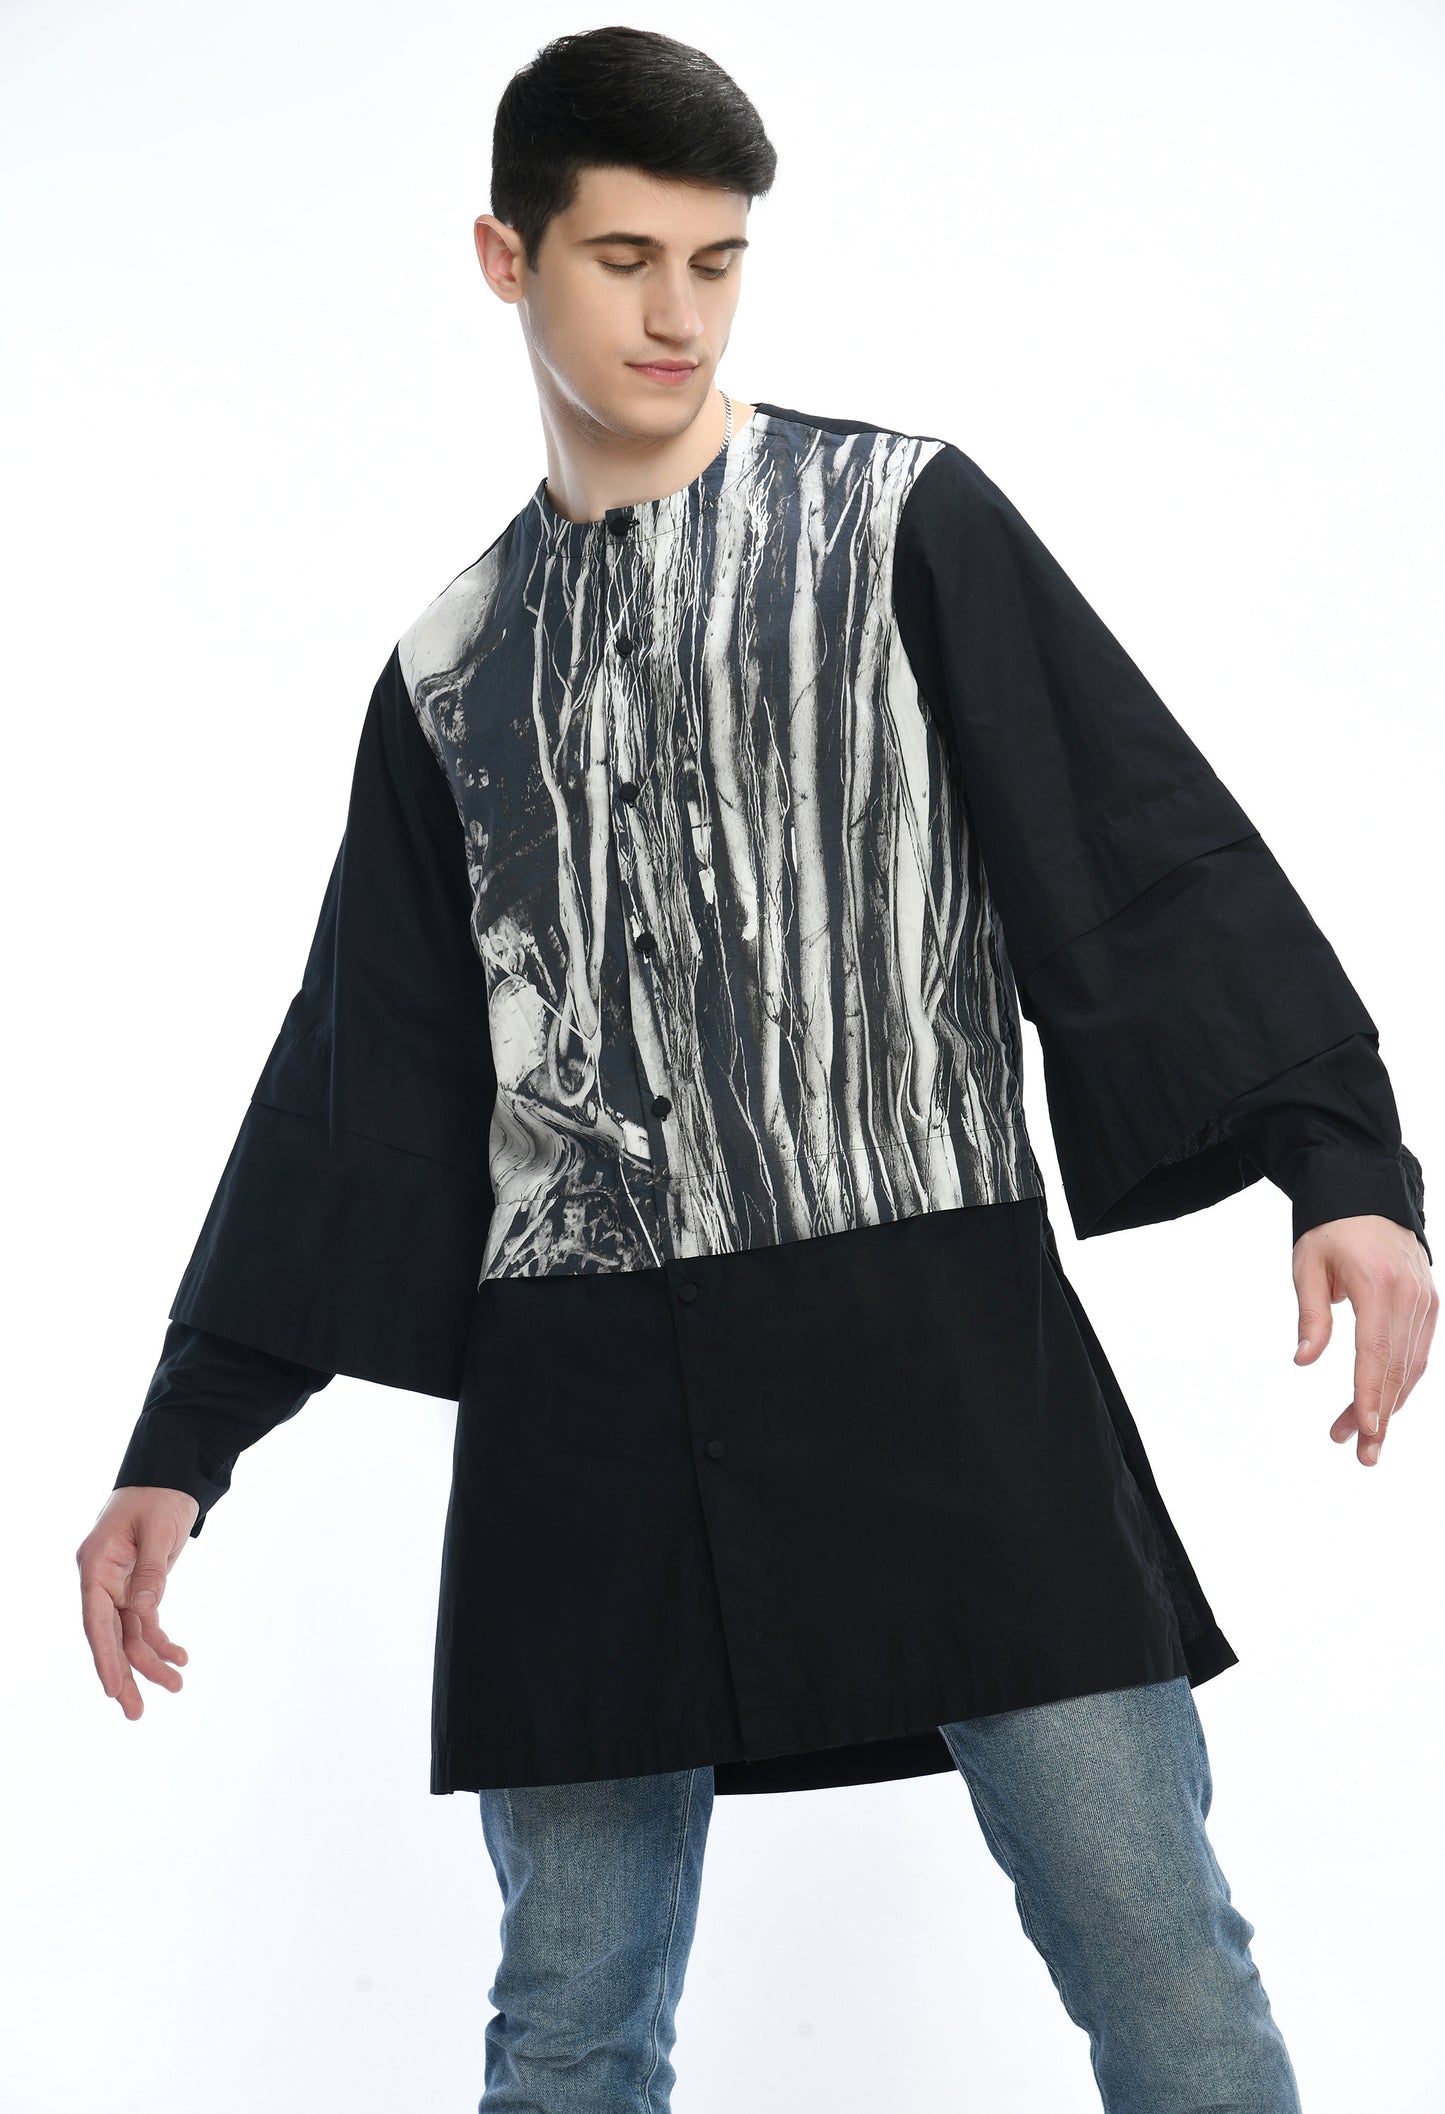 Black, stylish, lose-fit cotton shirt with digital print on it